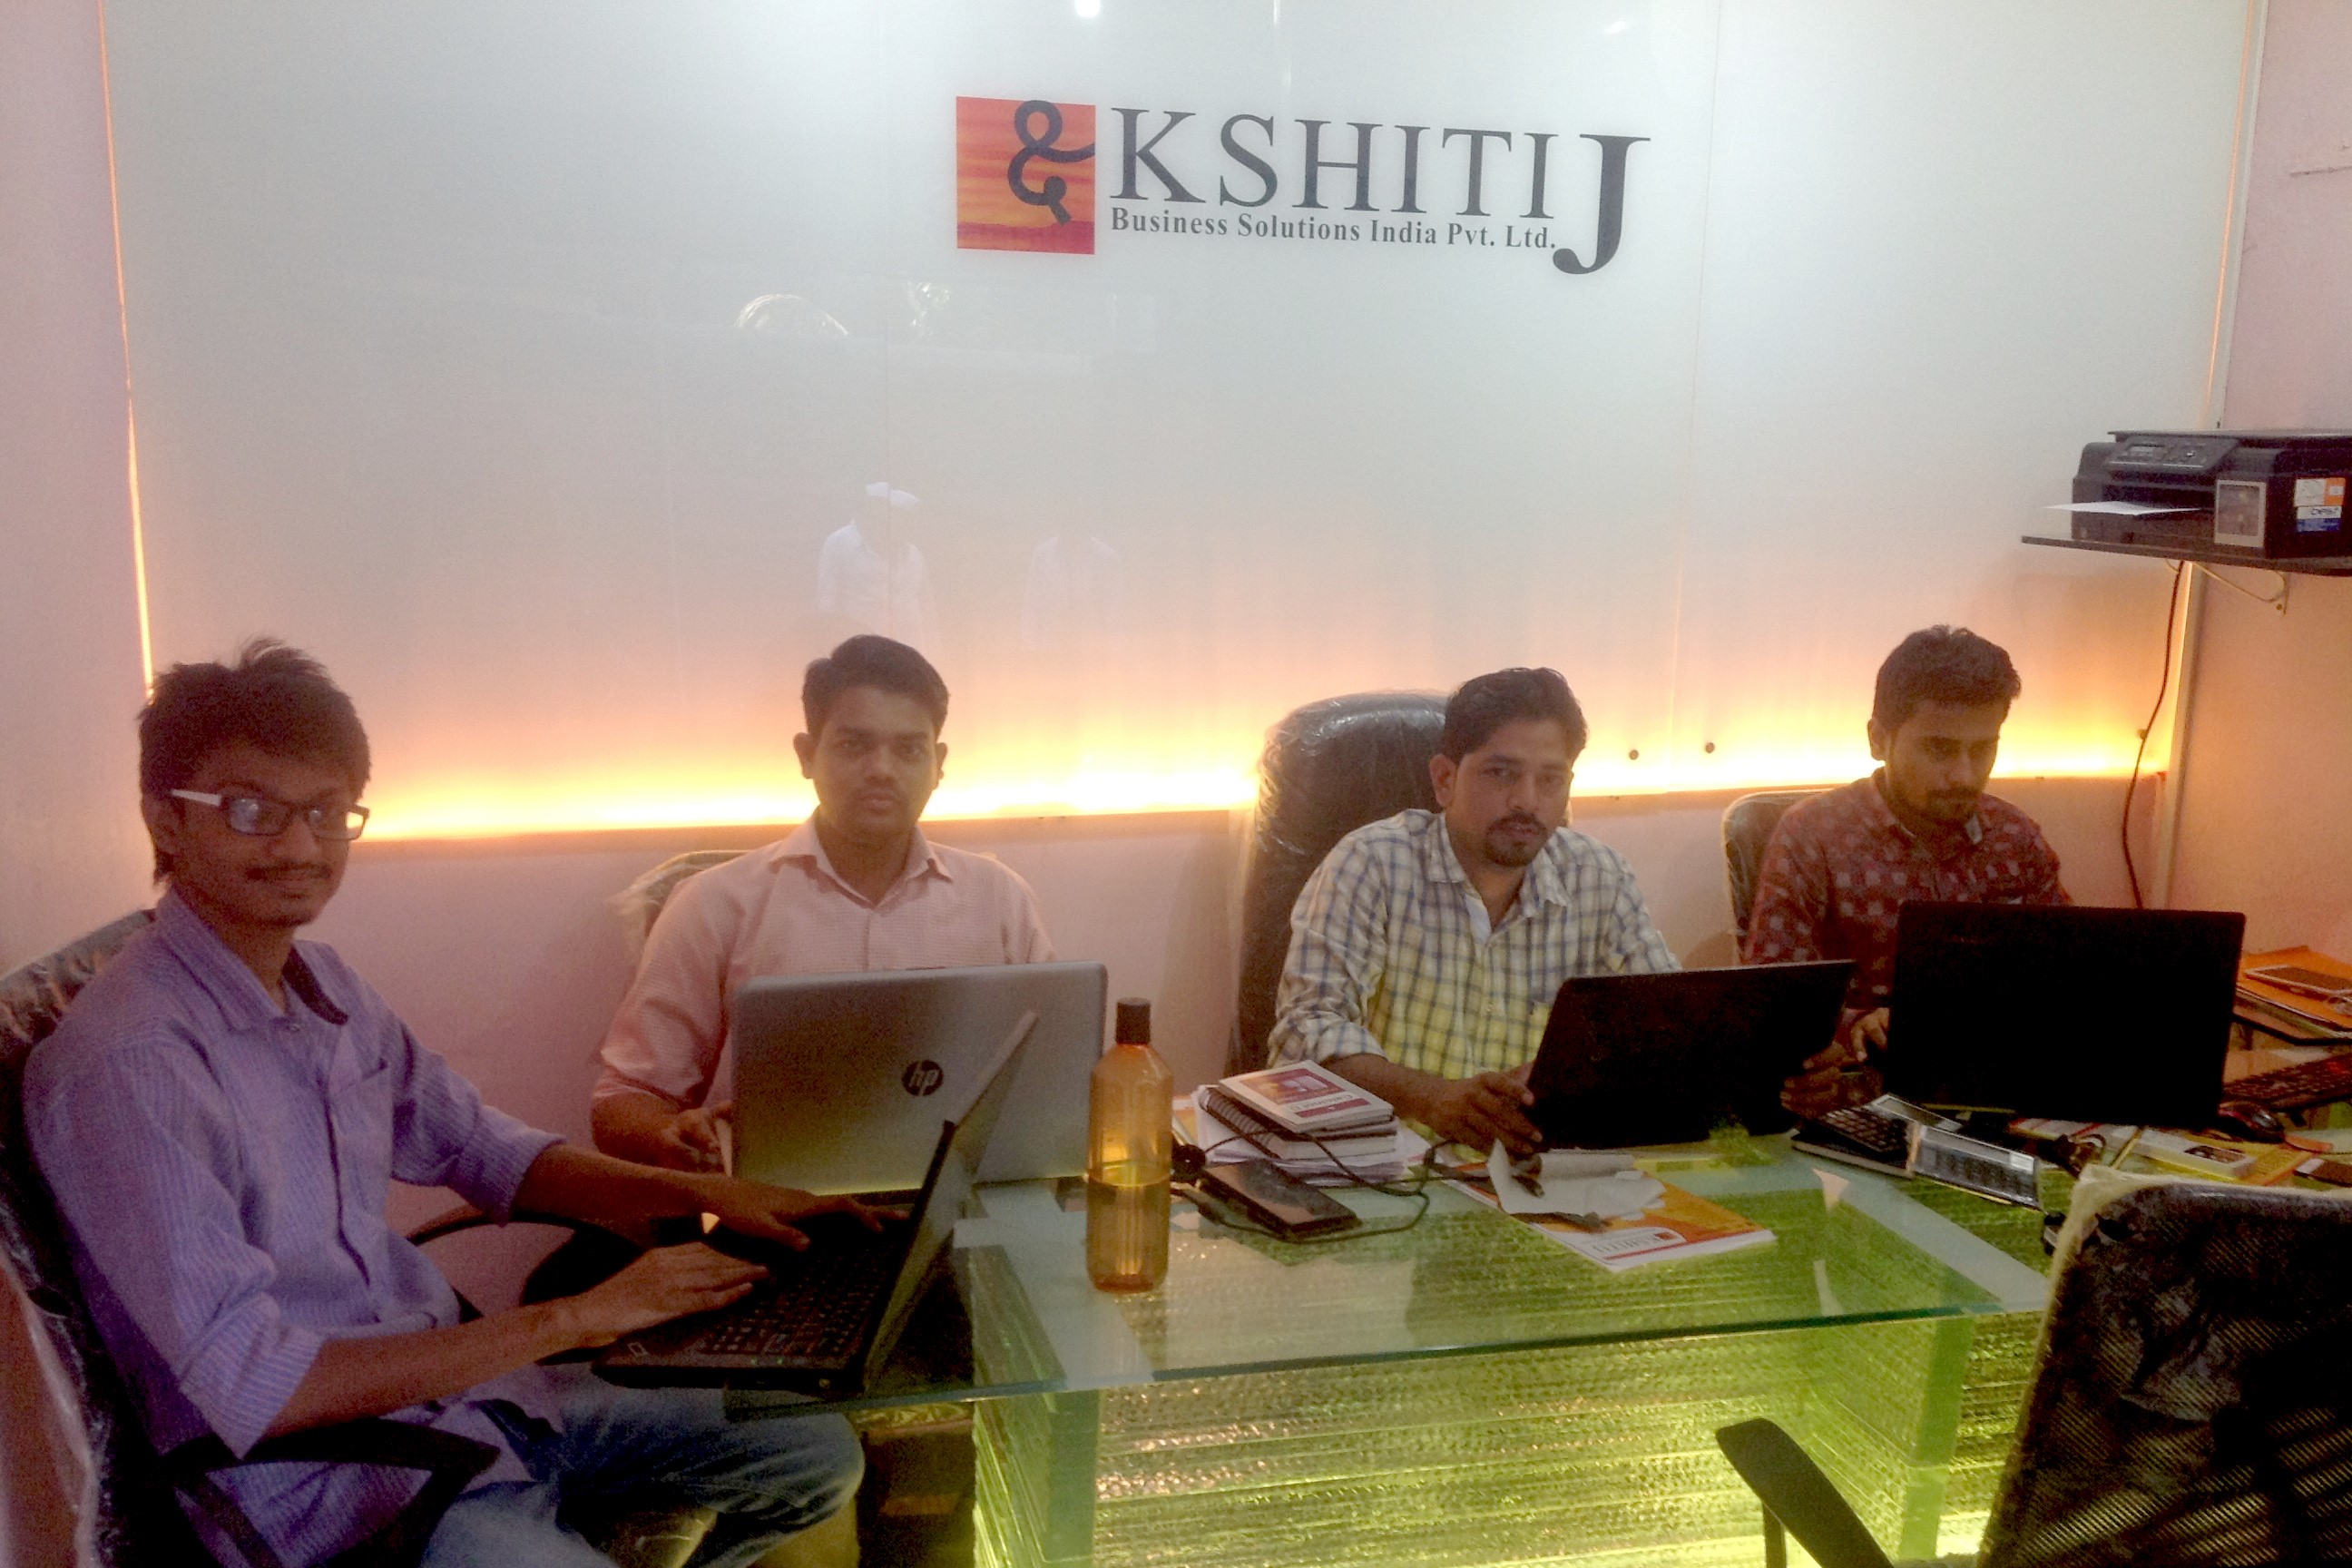 kshitij-business-solutions-india-pvt-ltd-in-dahisar-east-mumbai